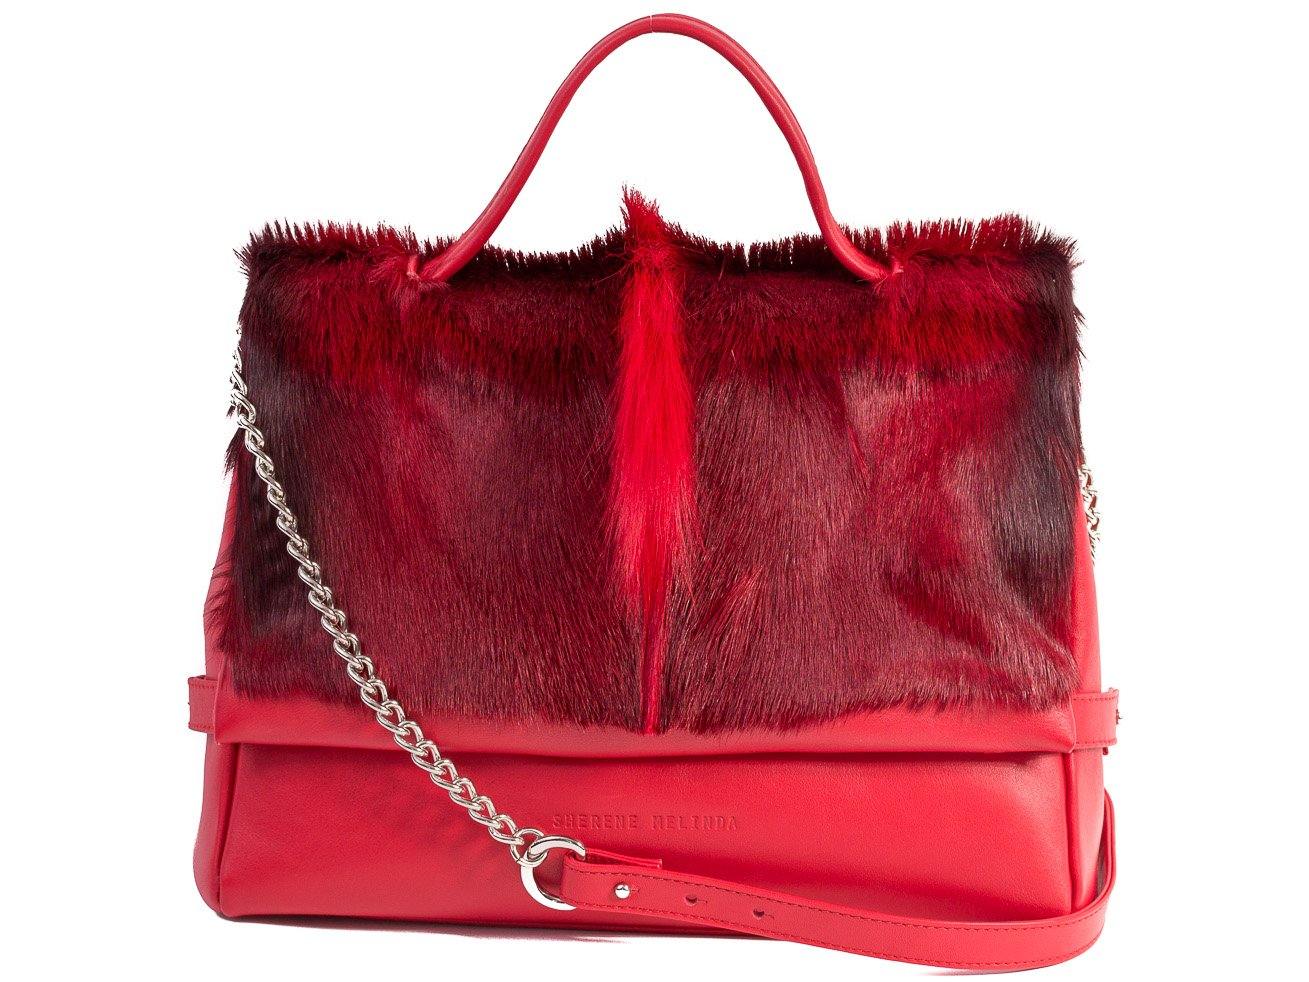 sherene melinda springbok hair-on-hide red leather smith tote bag fan front strap